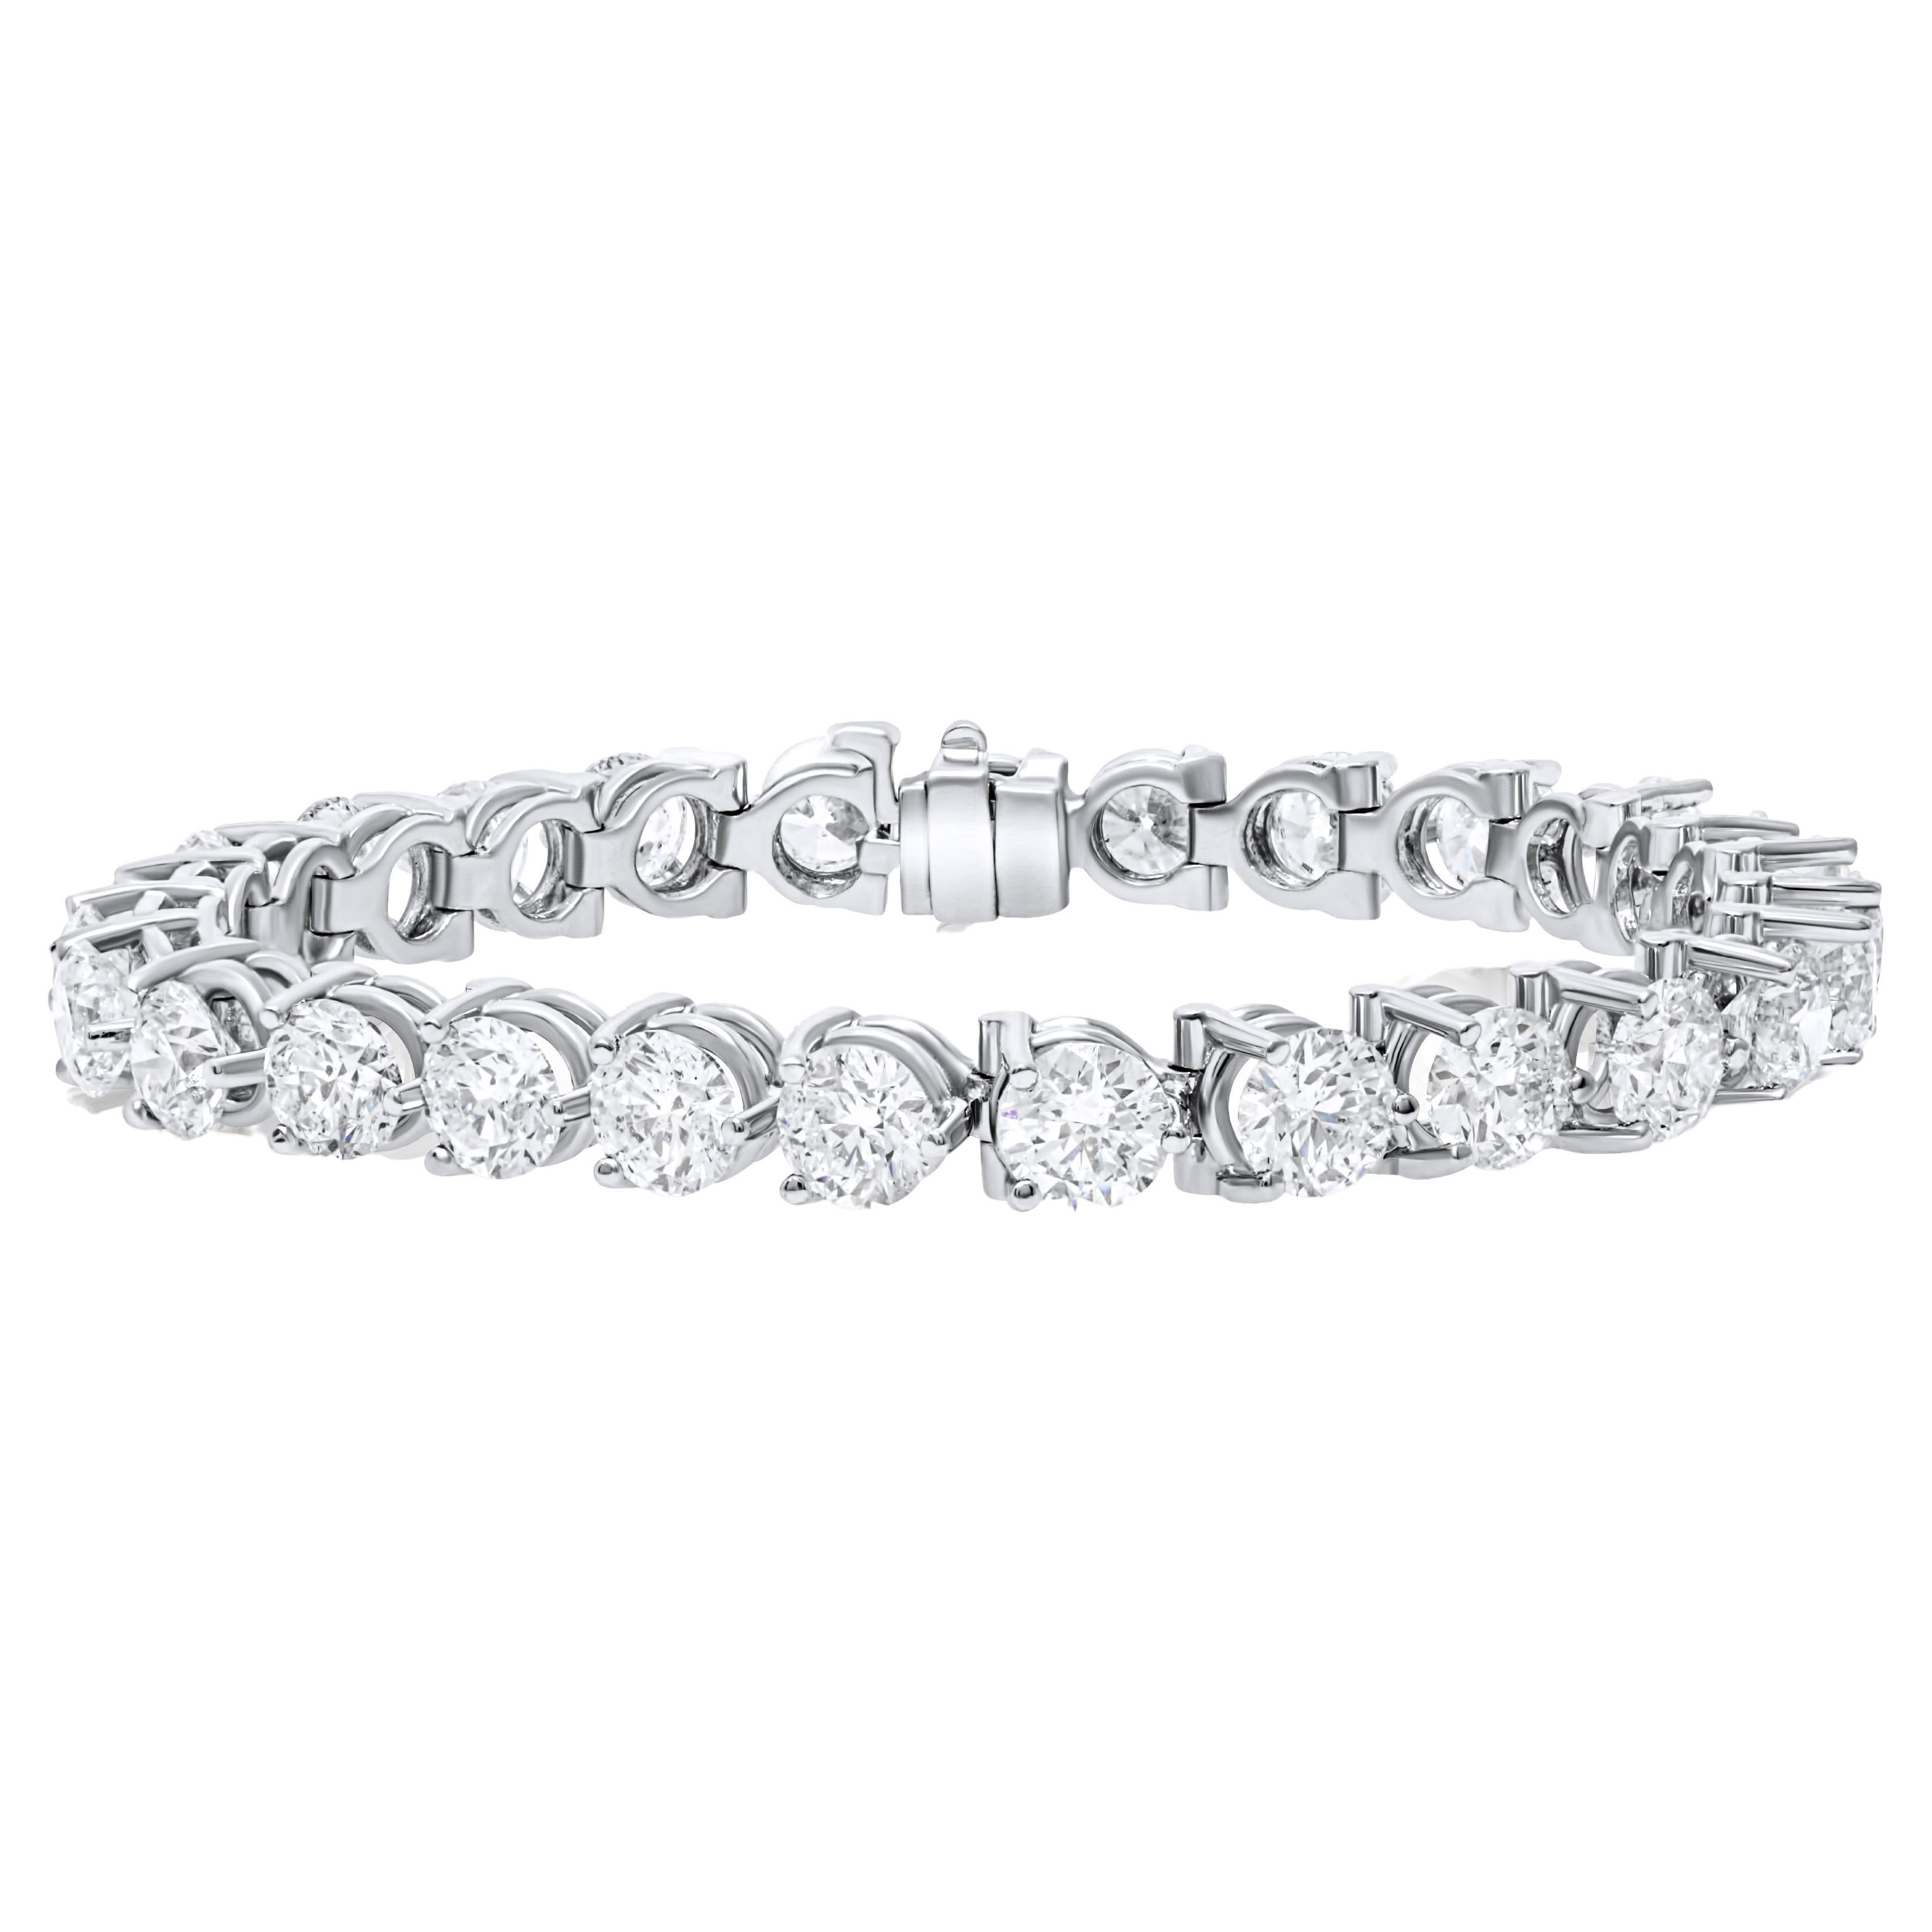 Diana M. Platinum 3 prong diamond tennis bracelet adorned with 19.50 cts